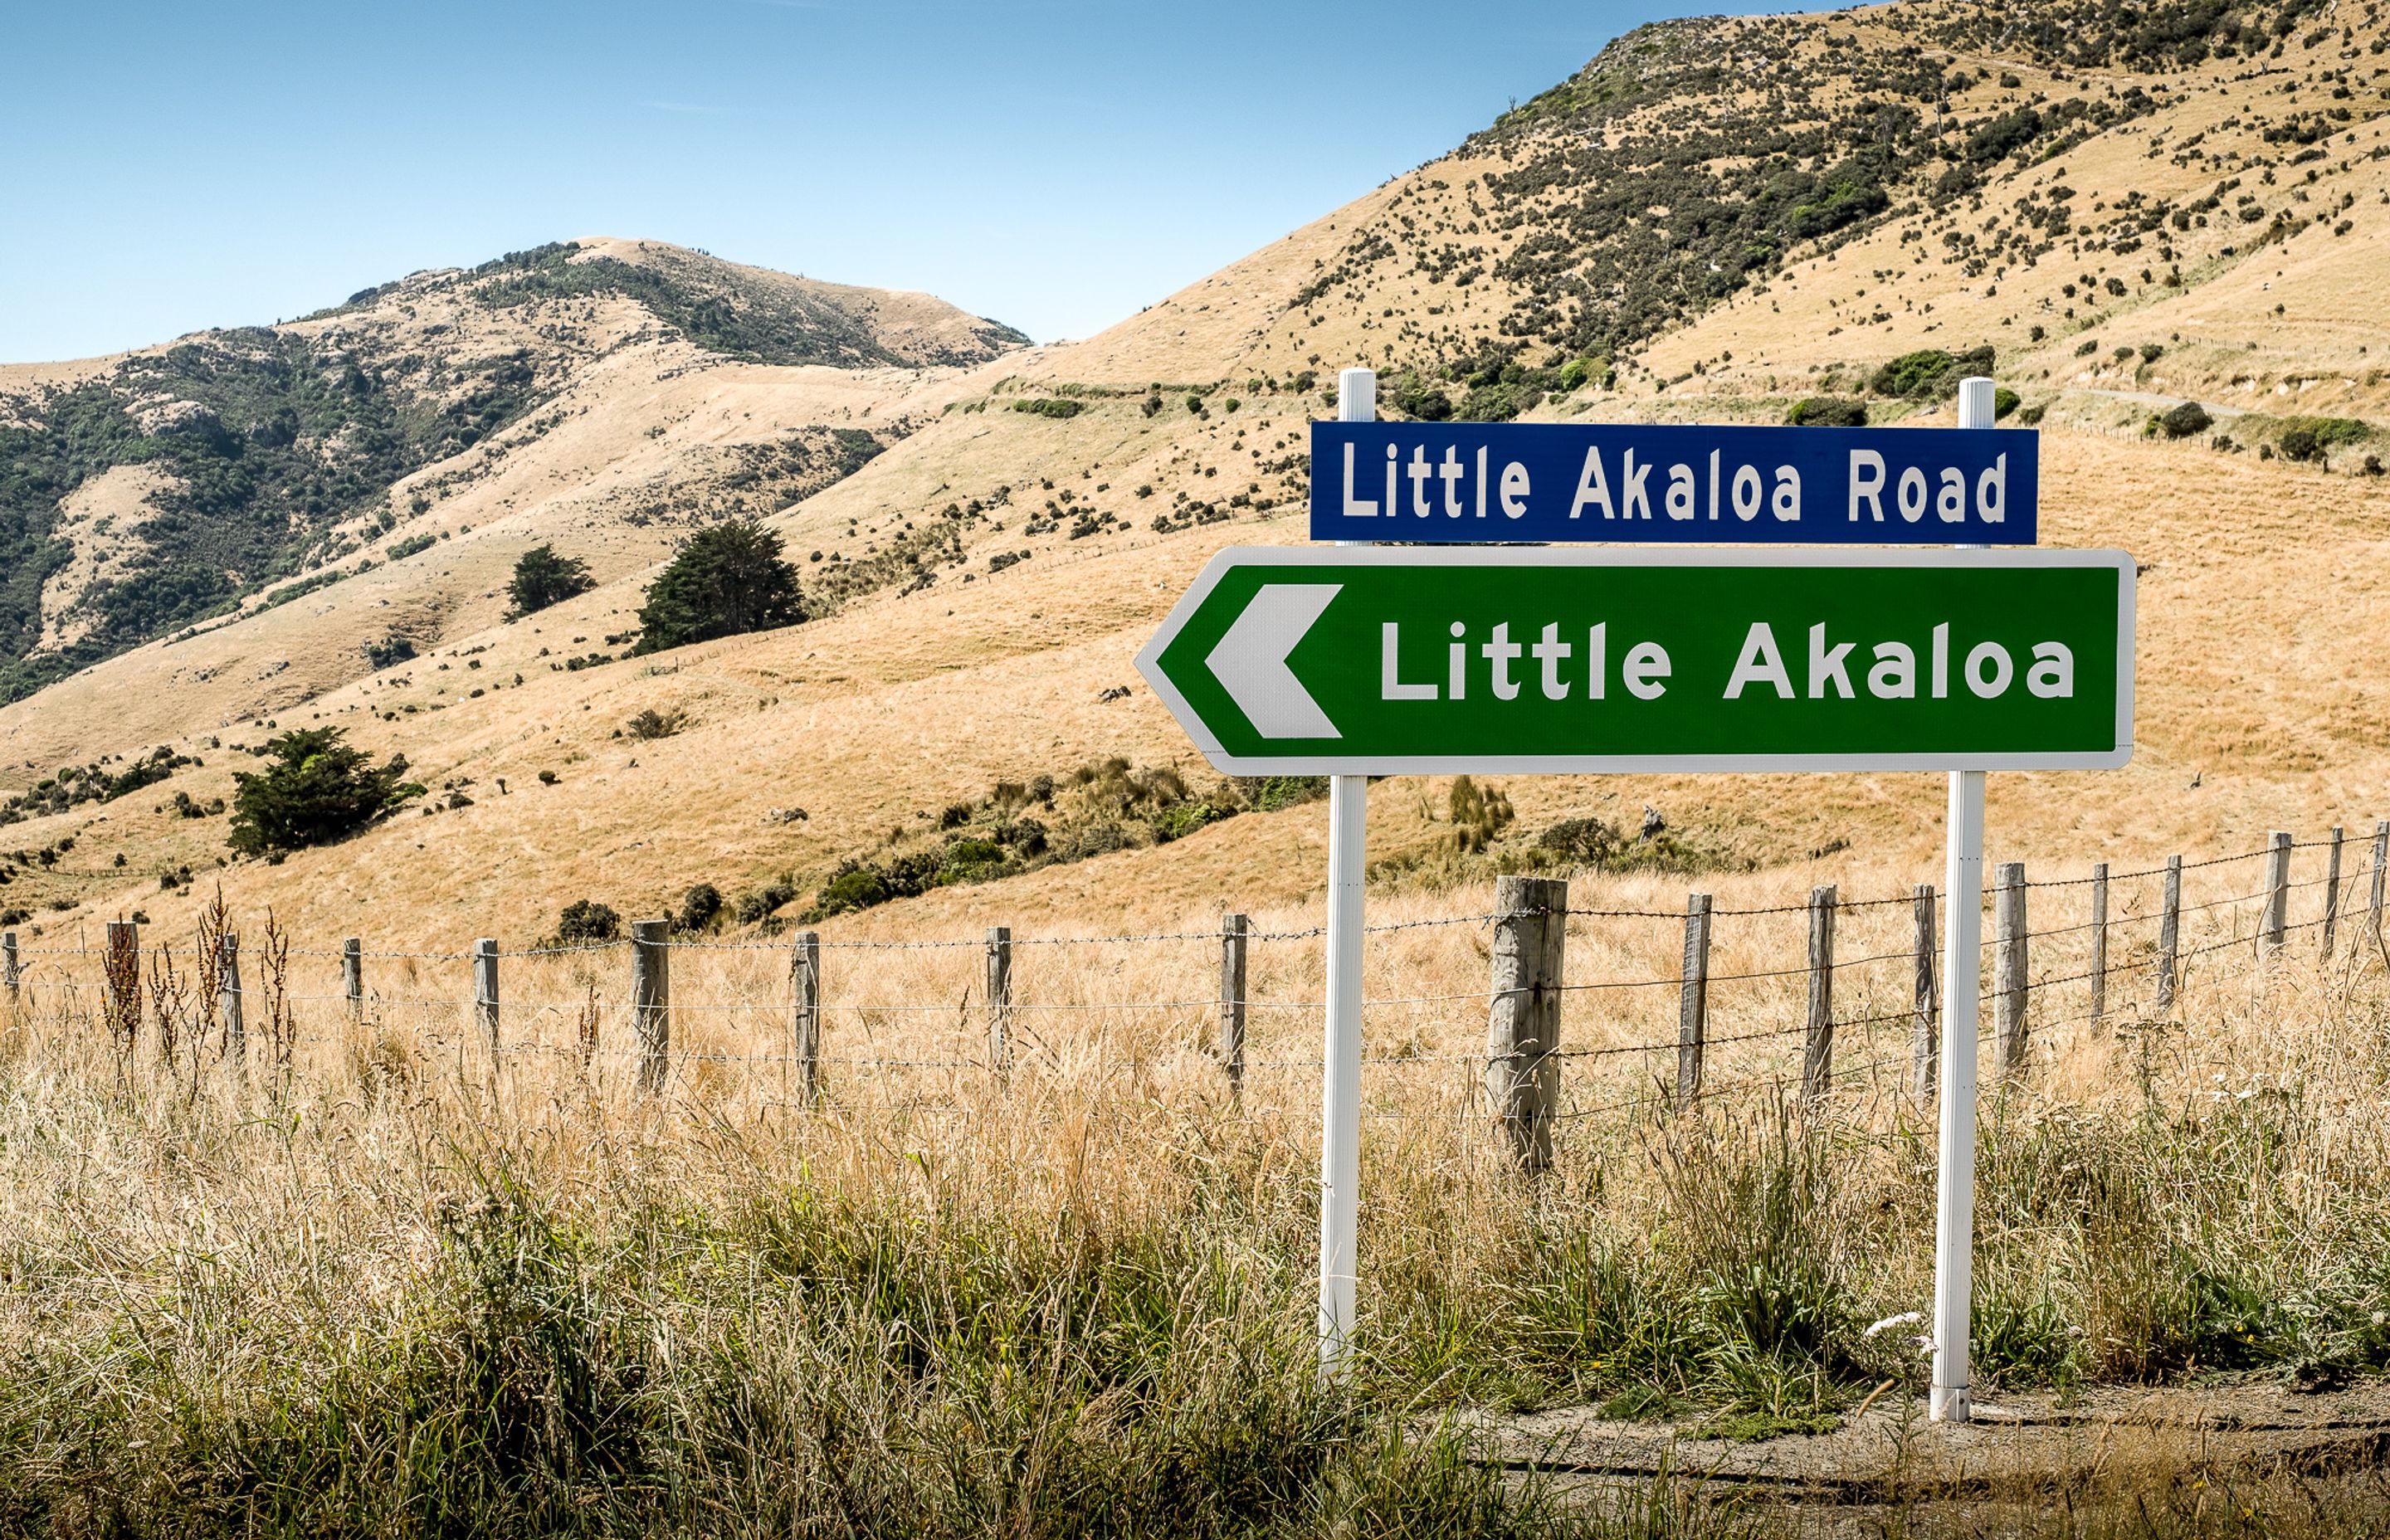 The road to Little Akaloa Road.